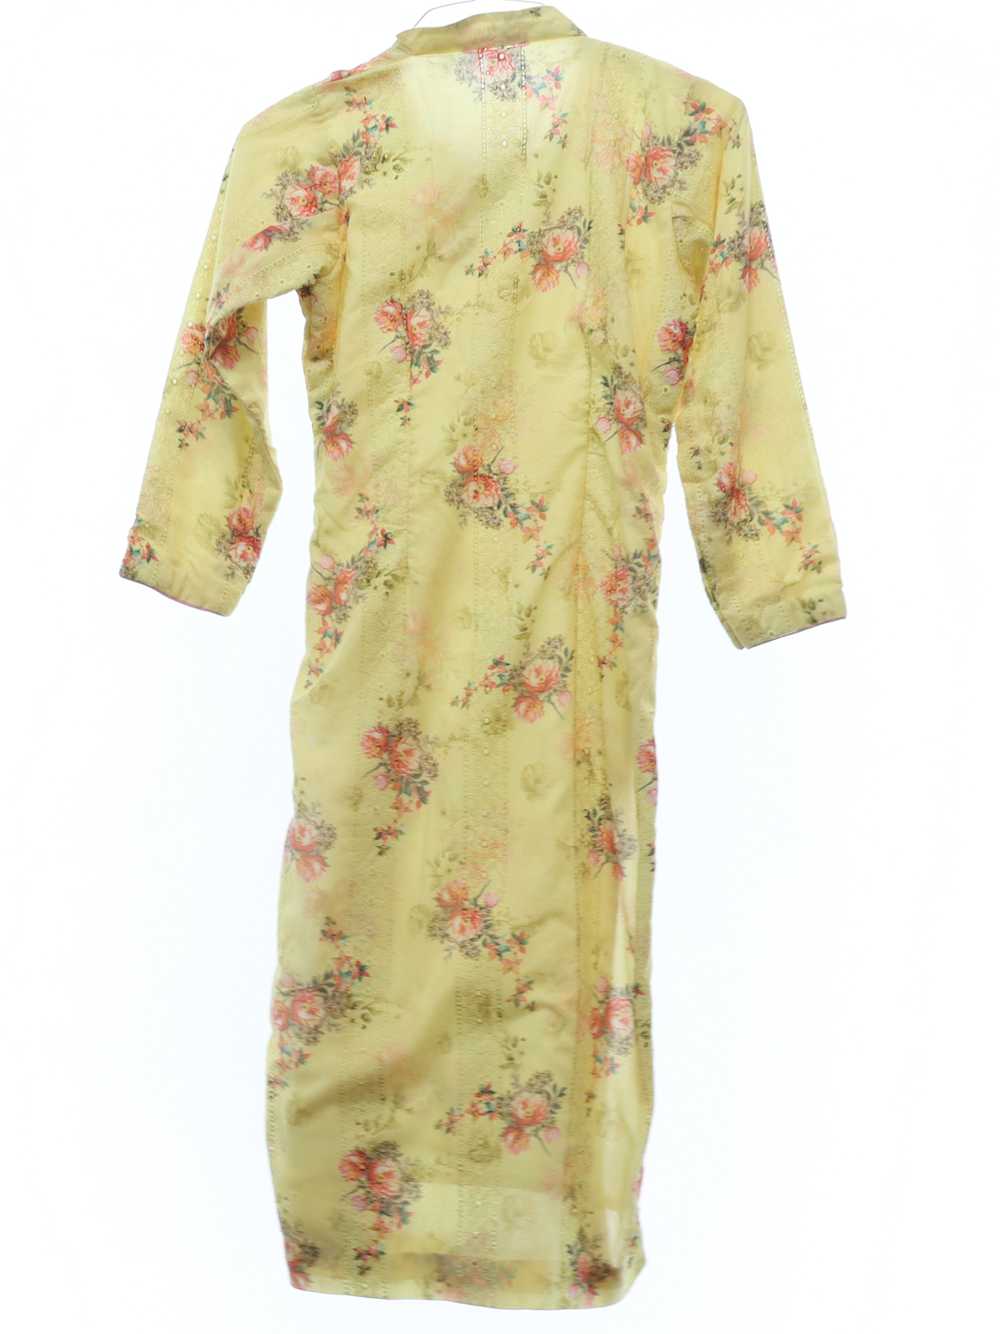 1960's Hippie Dress - image 3